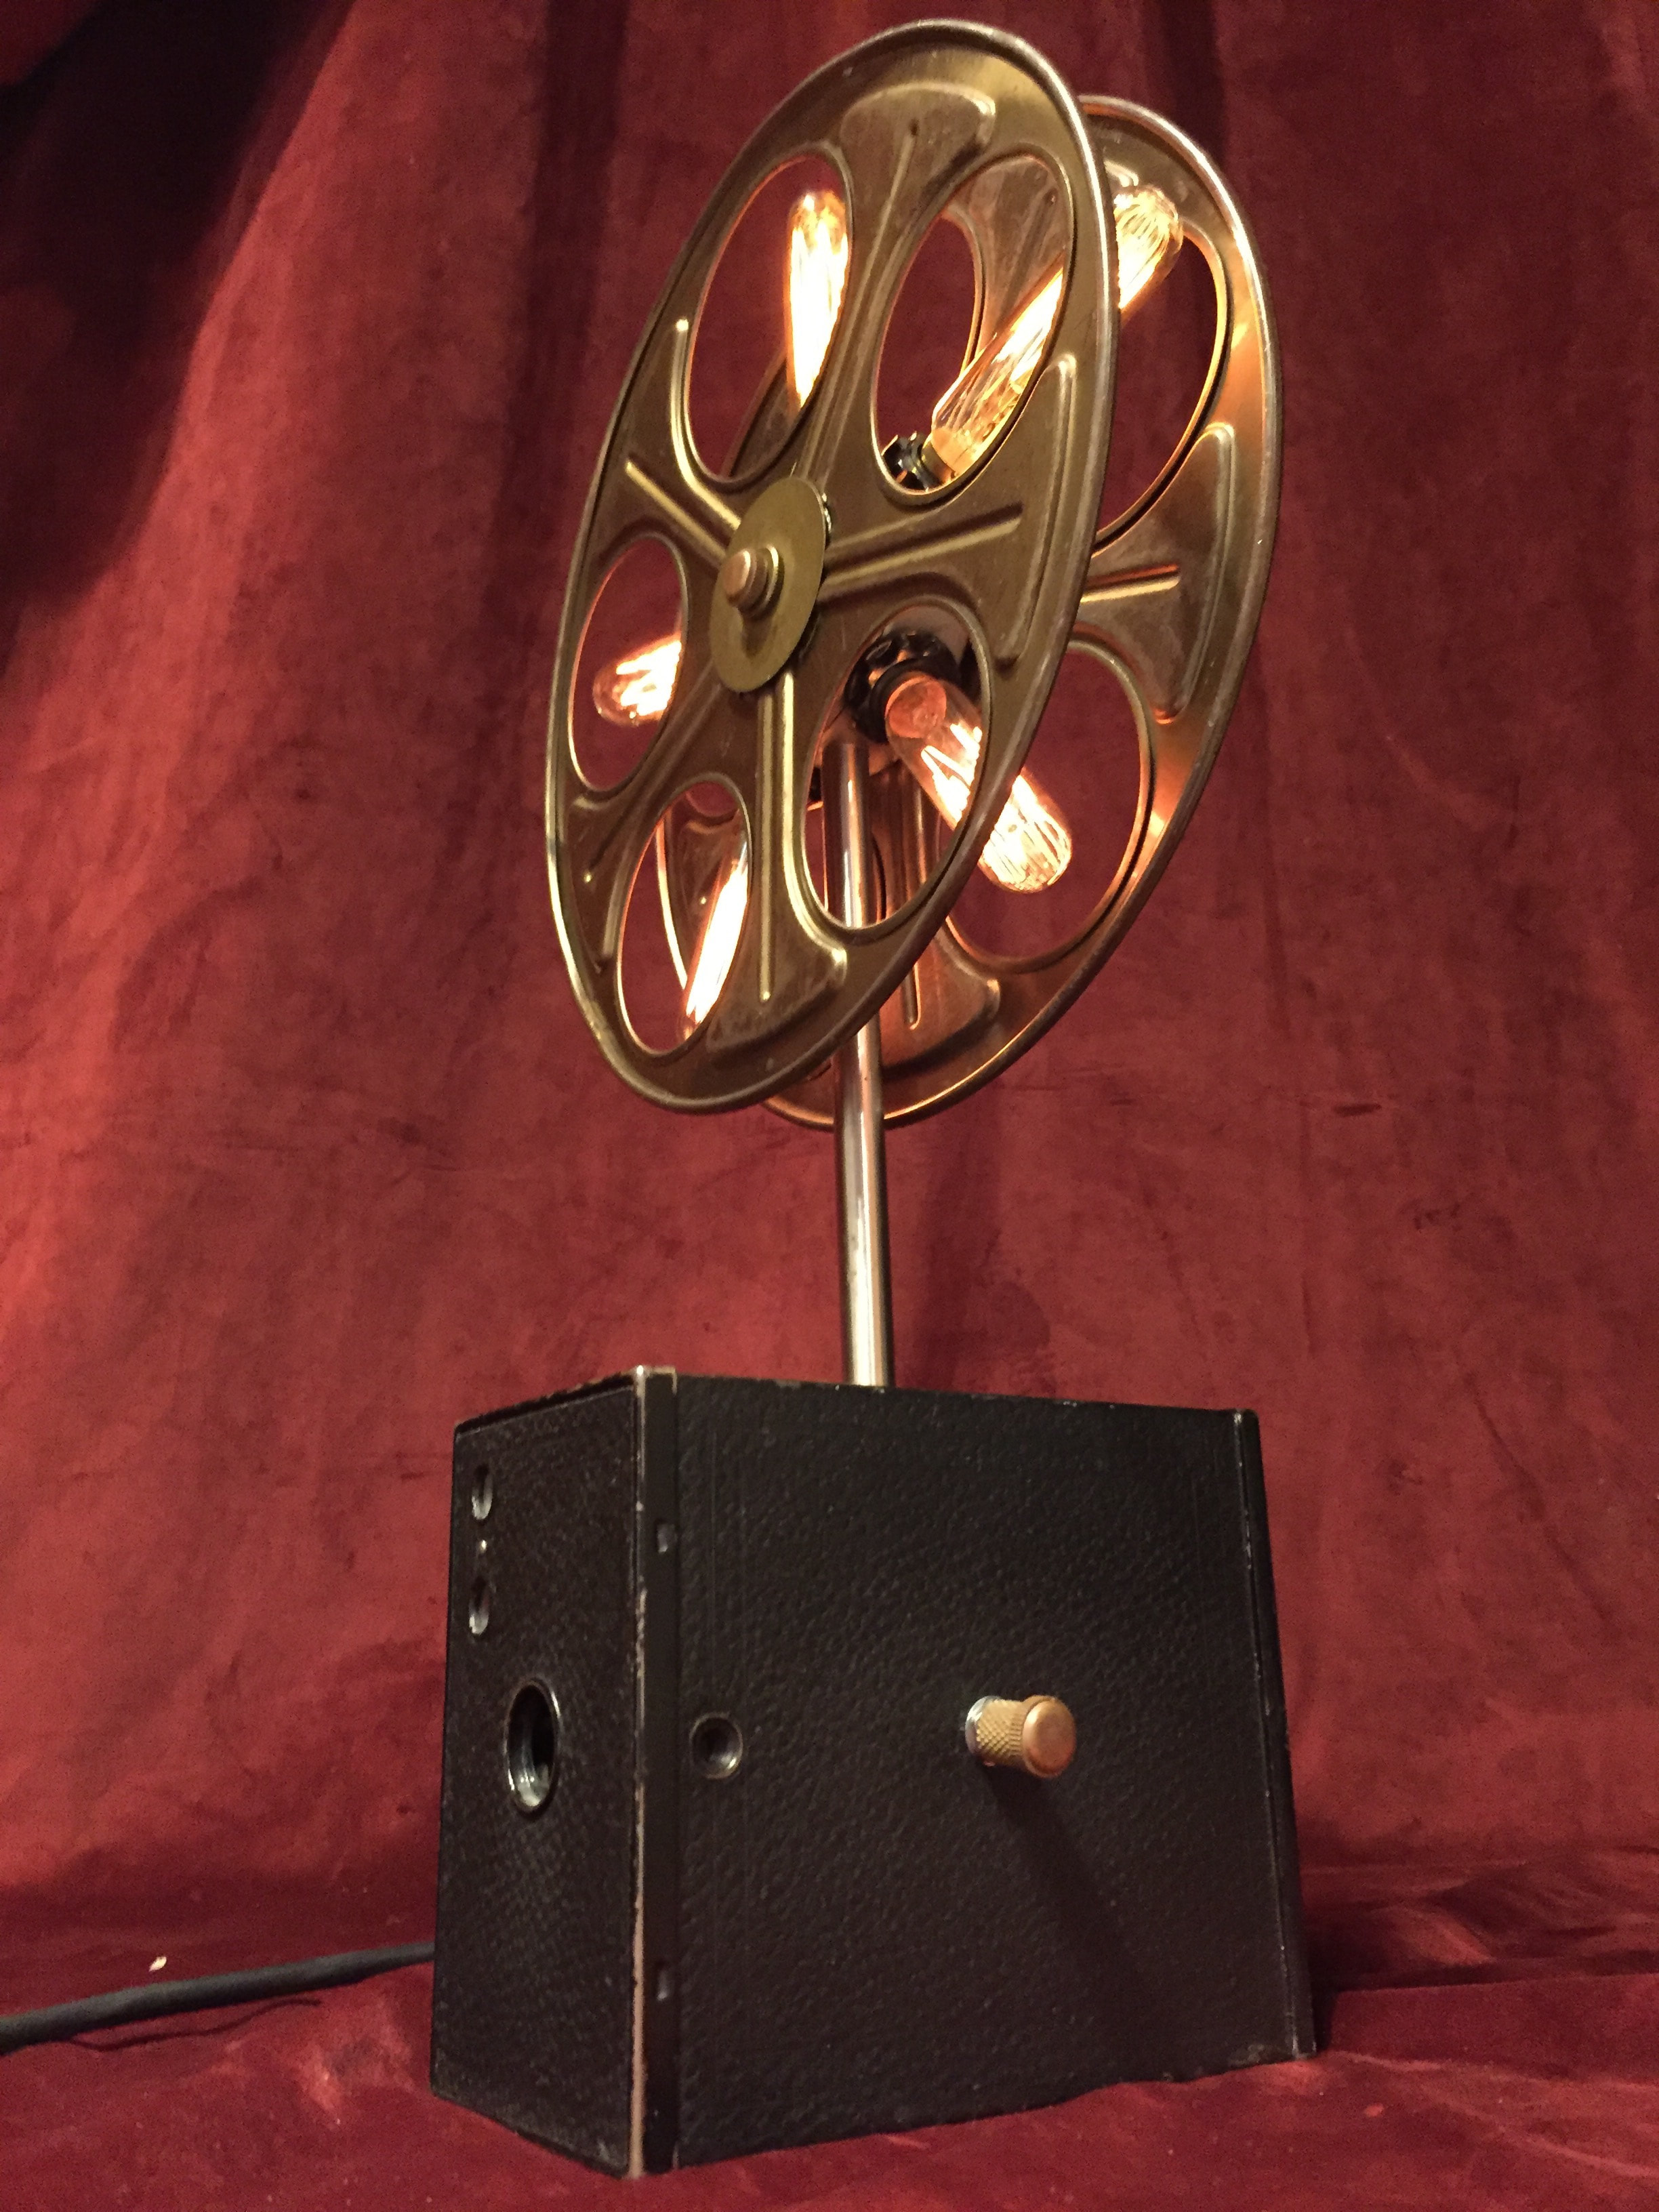 Movie Reel w/ Edison bulbs mounted on vintage box camera - Illuminated  Objects